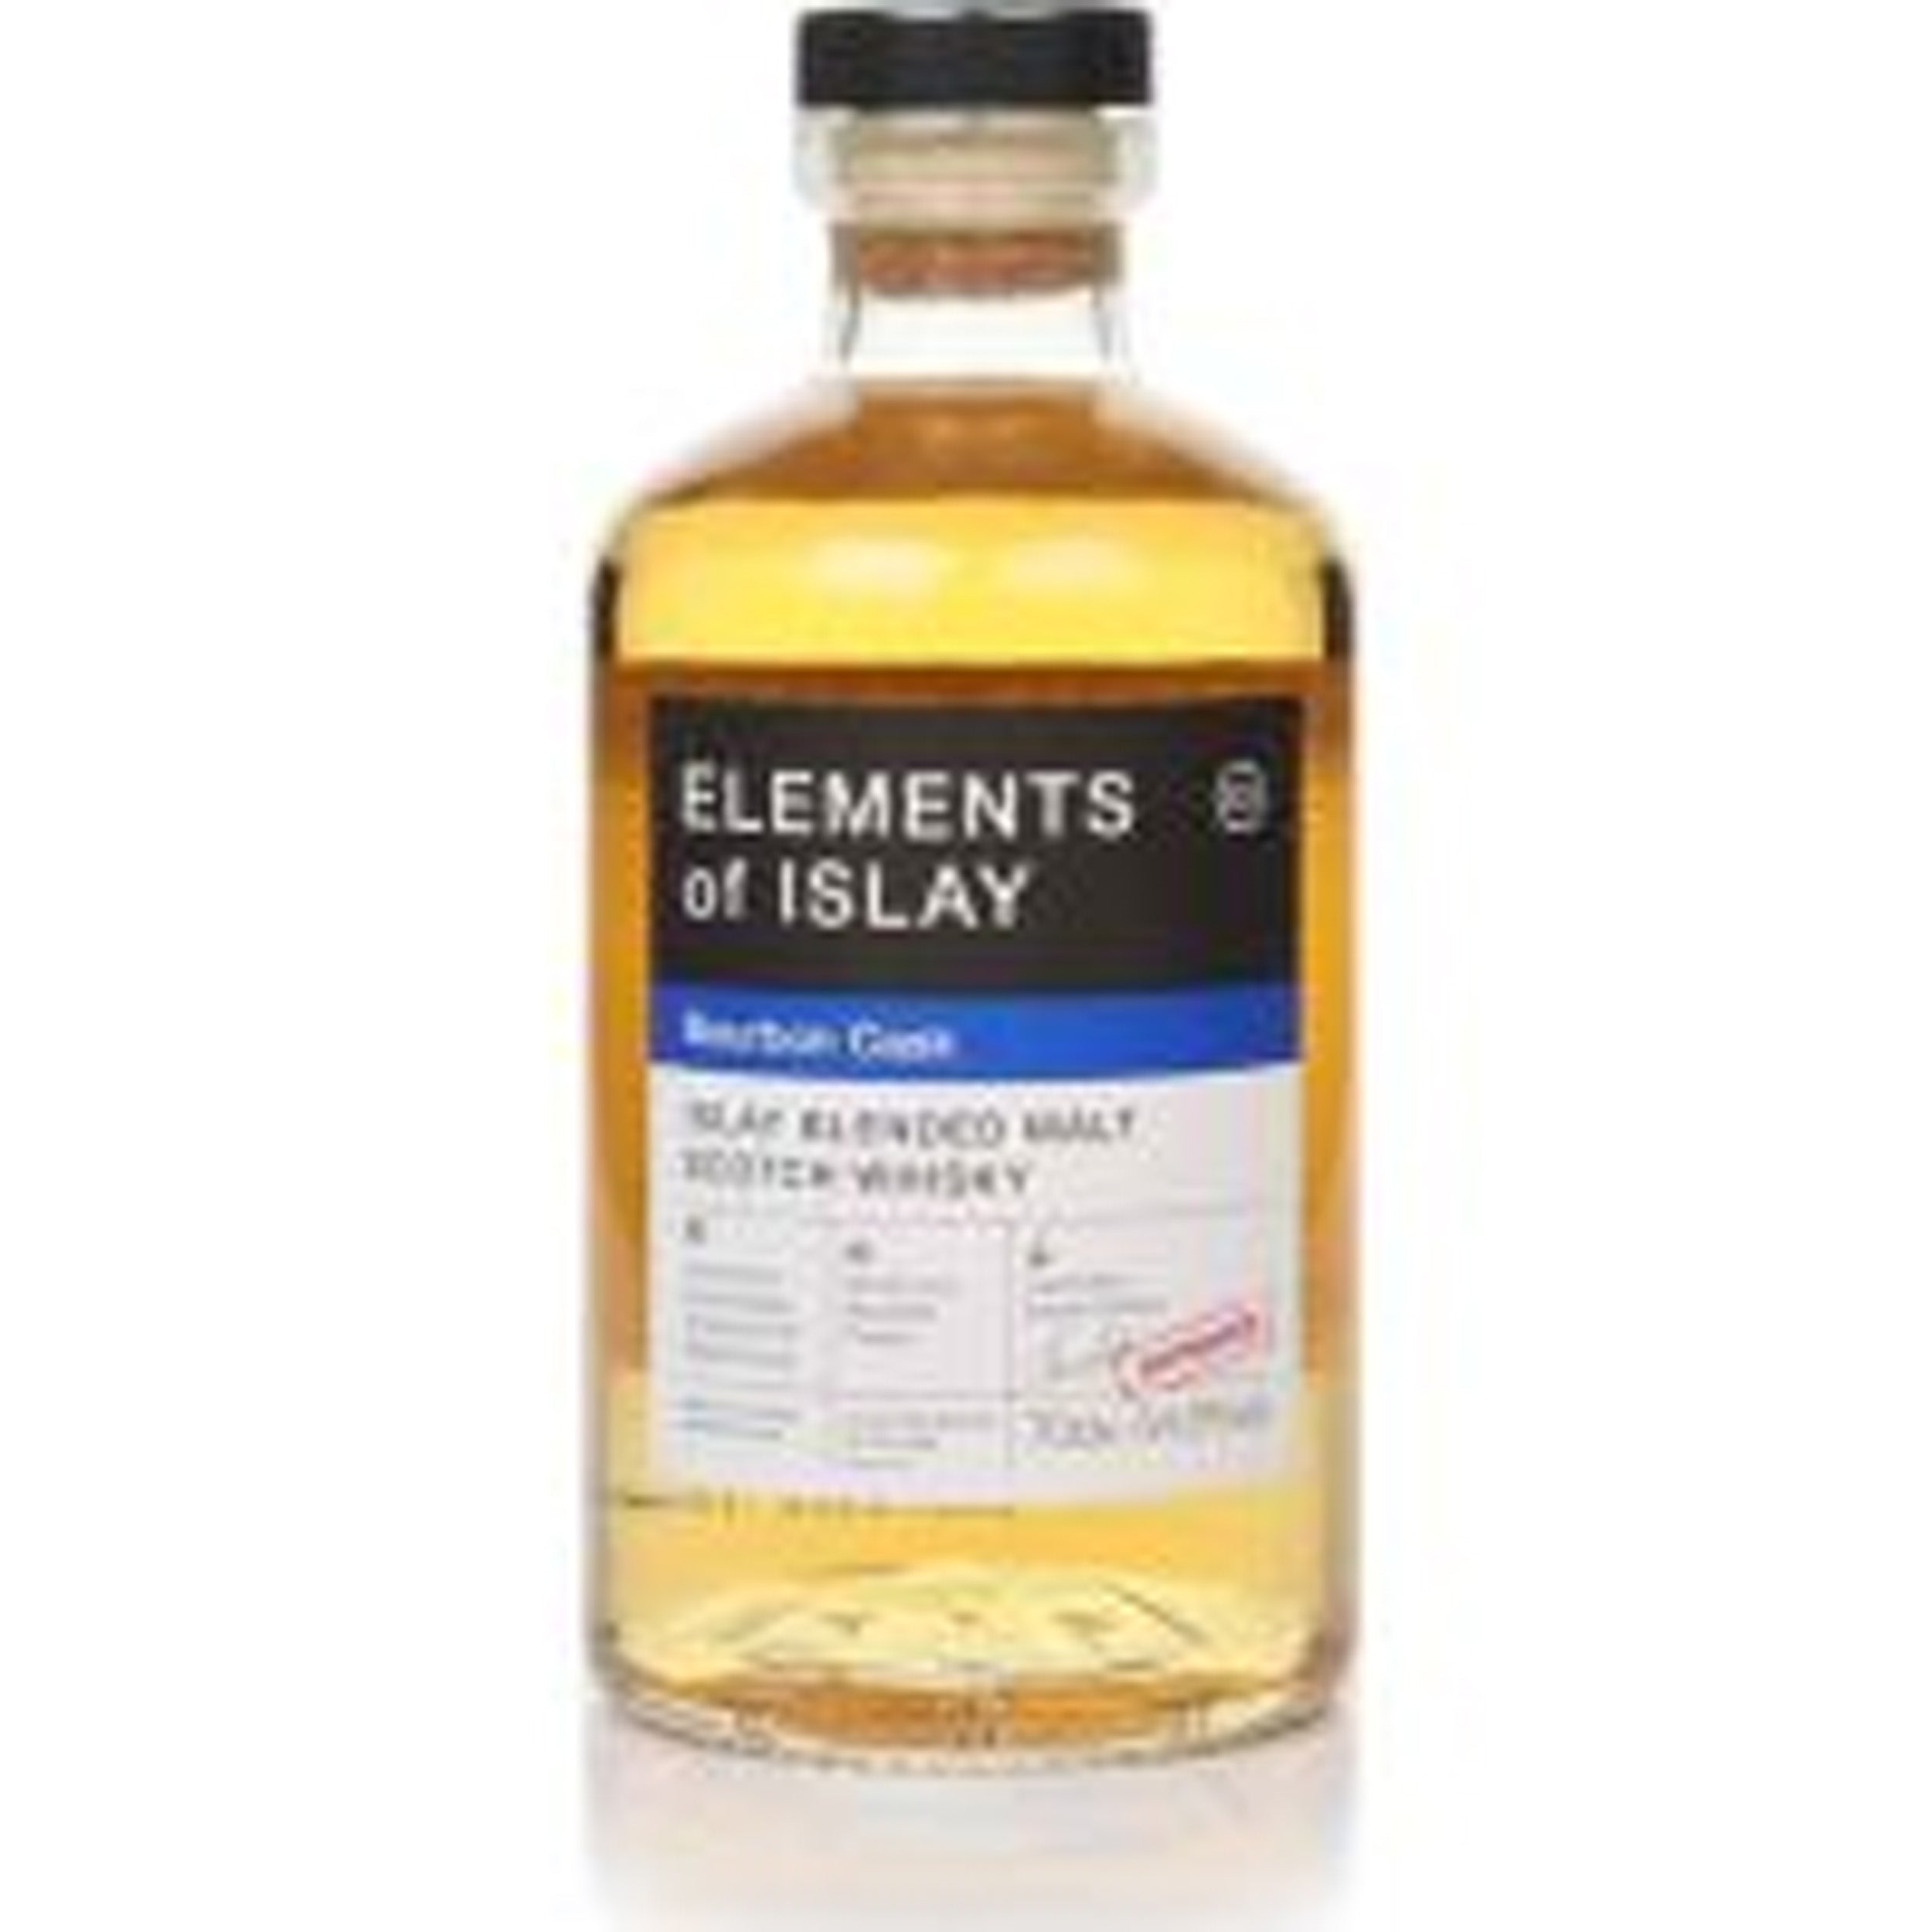 Elements Of Islay Bourbon Cask Islay Blended Malt Scotch Whisky